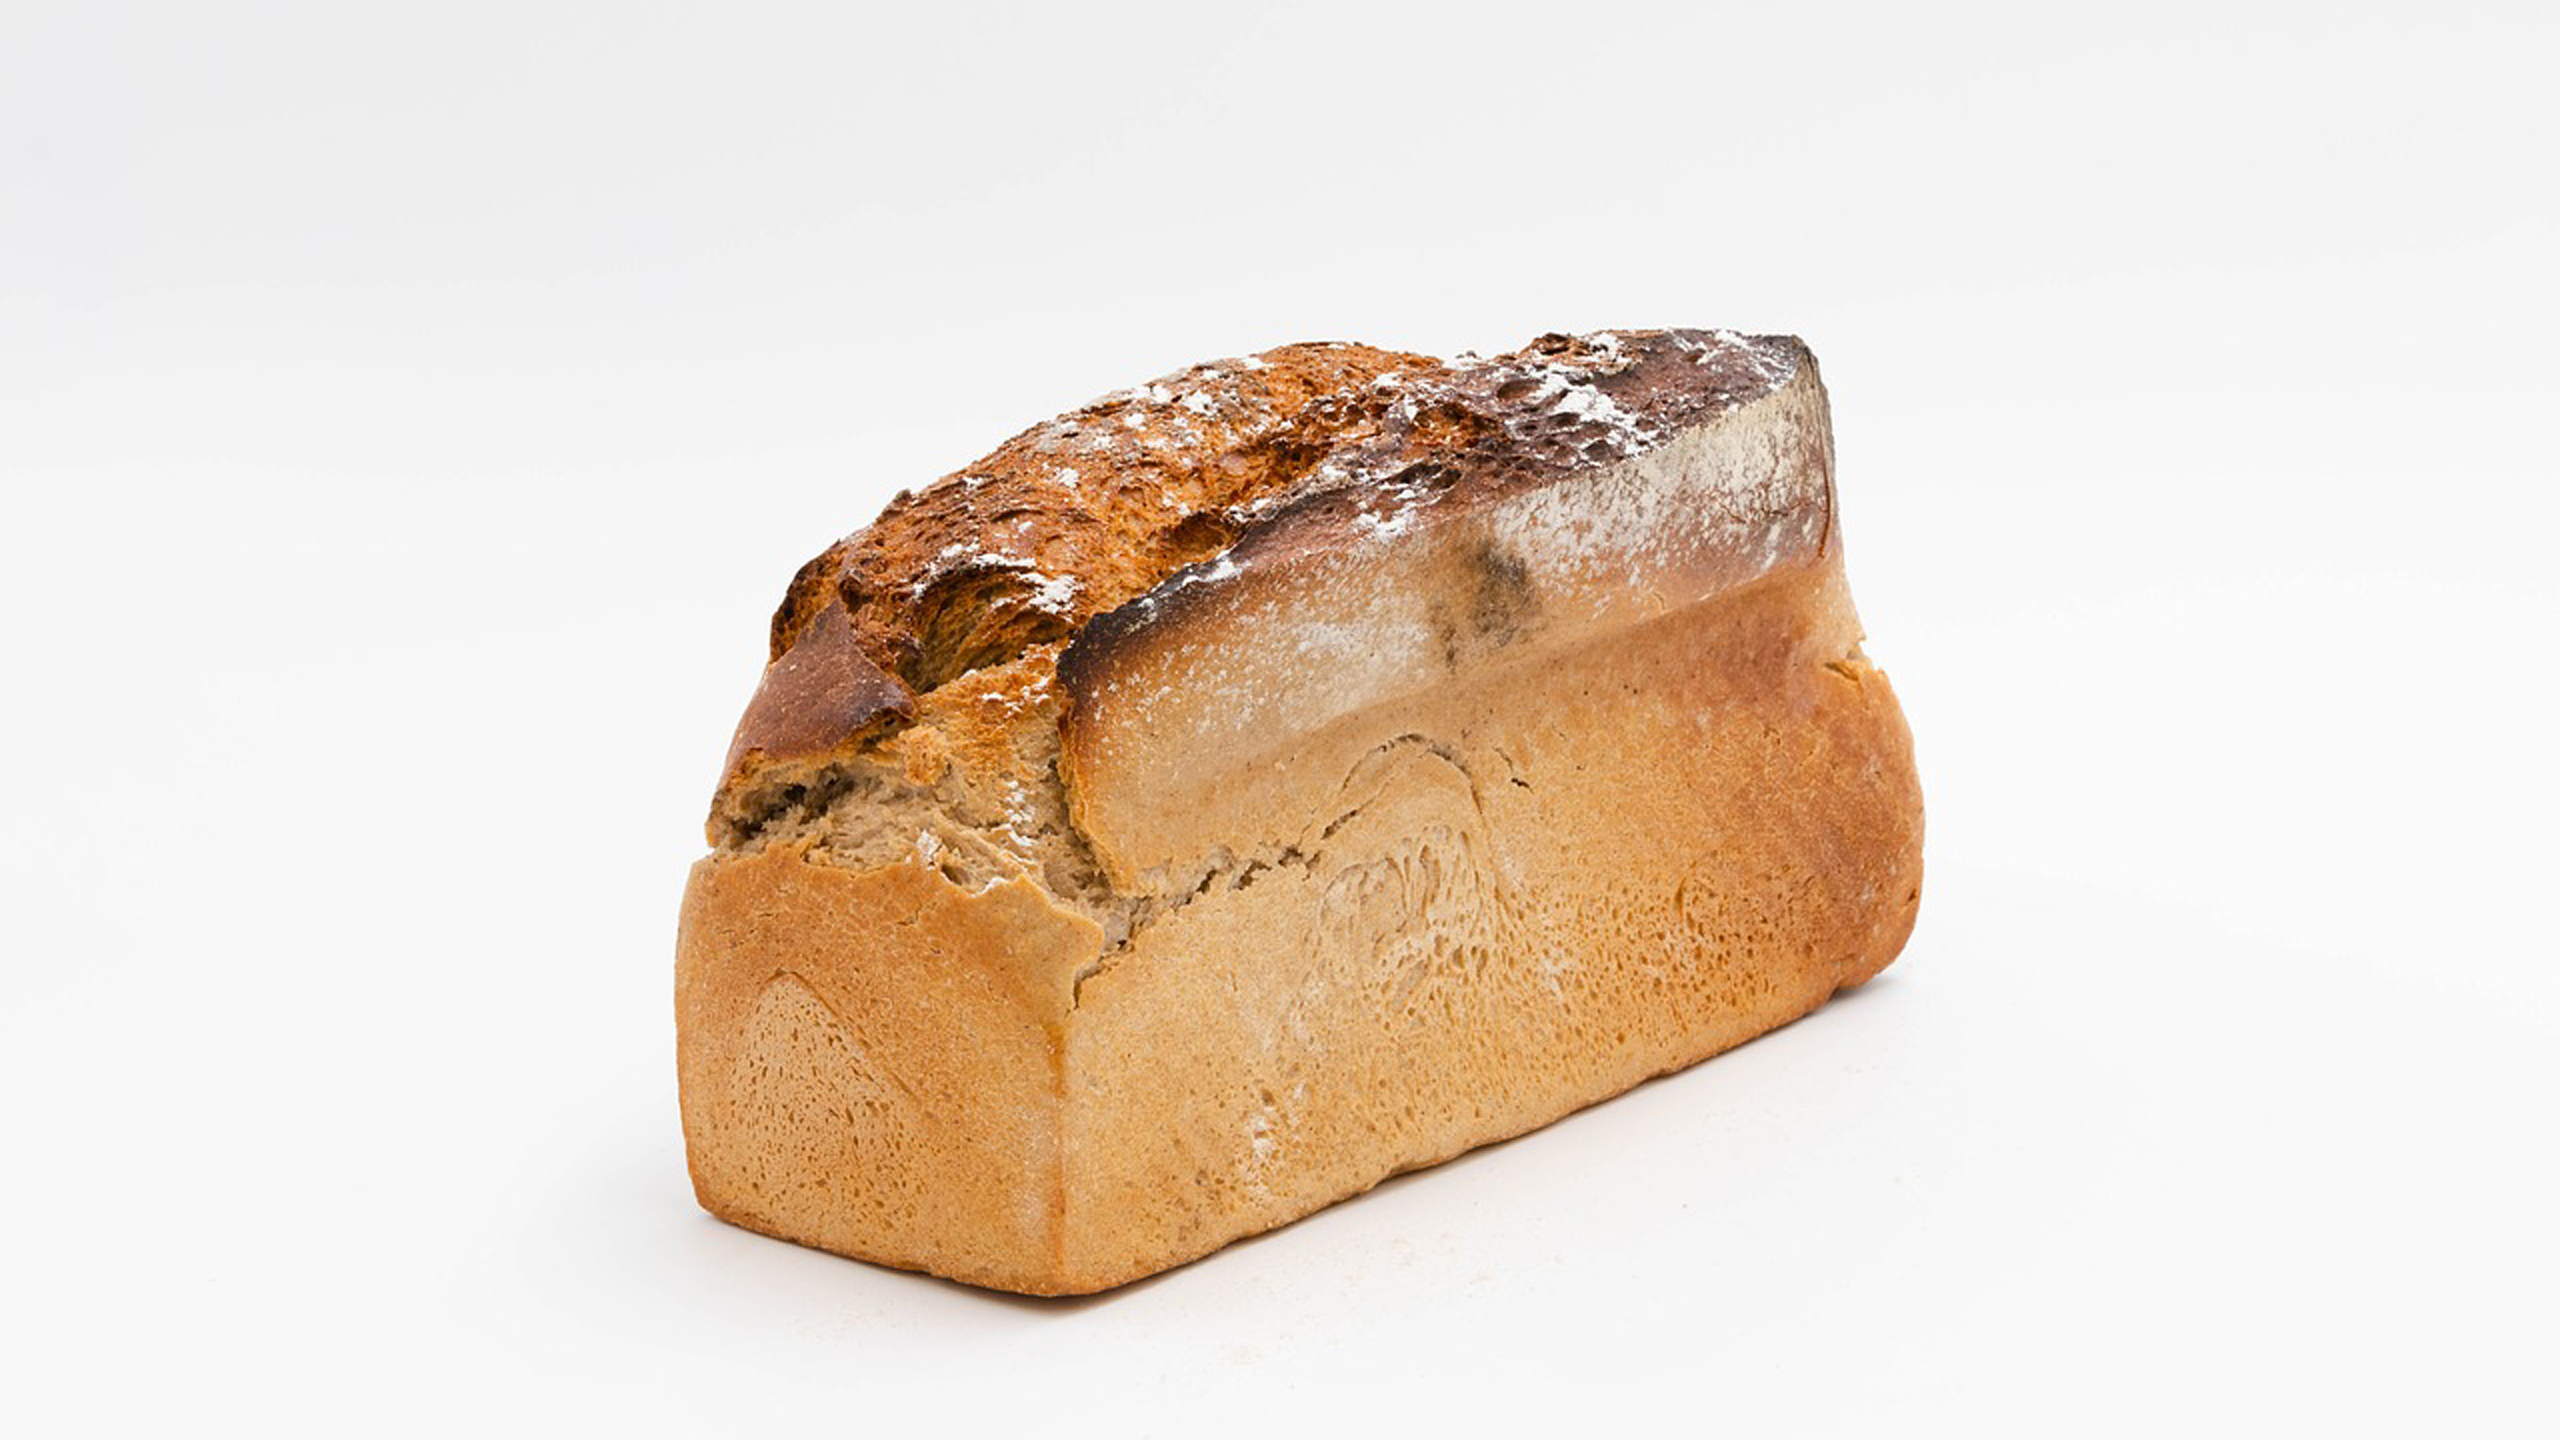 pan de caja